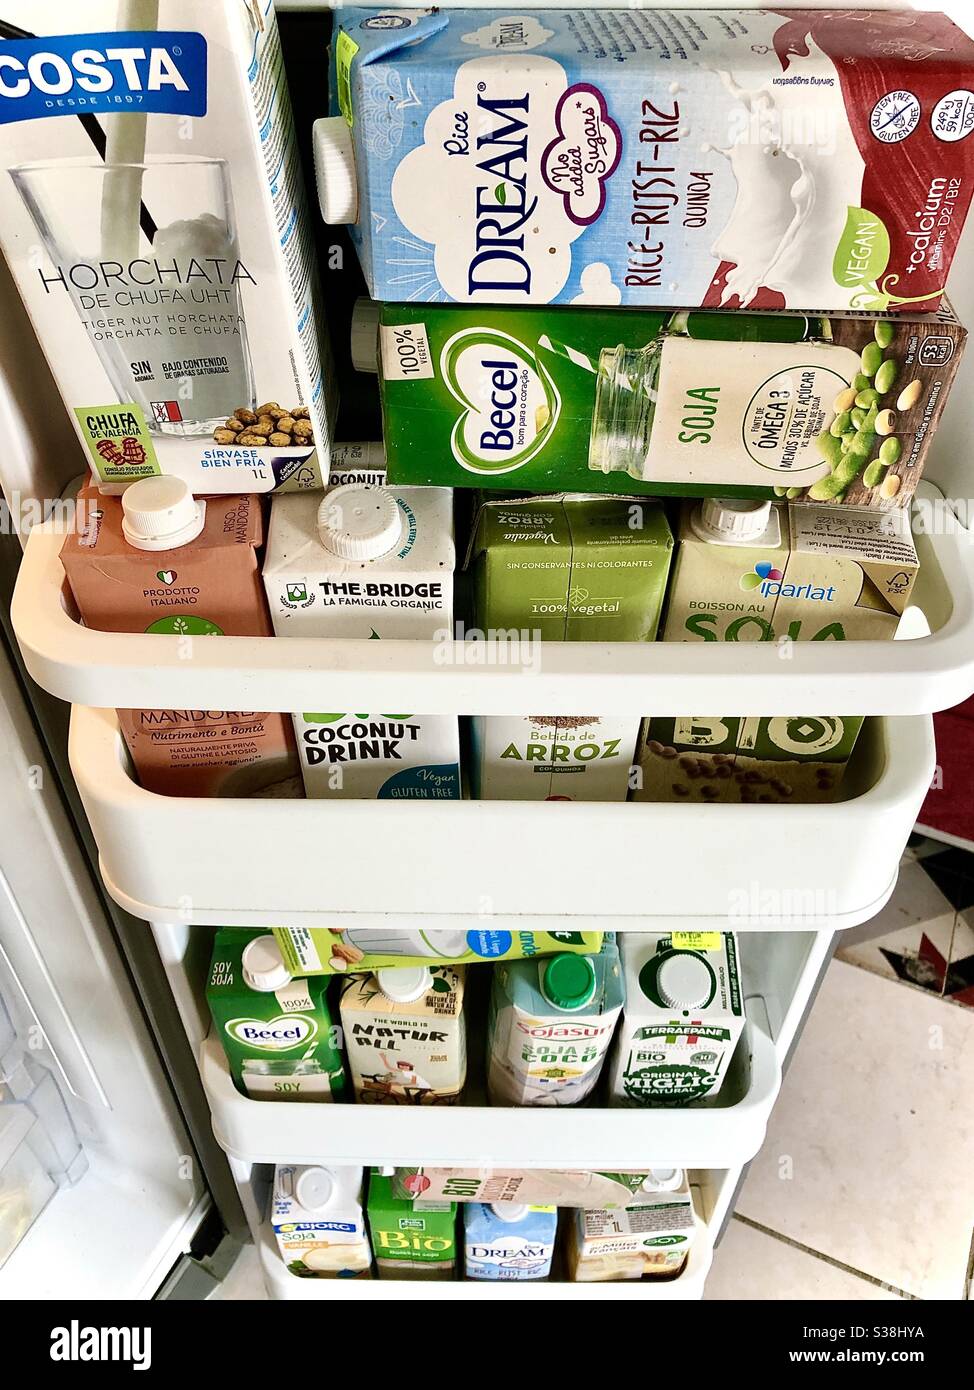 https://c8.alamy.com/comp/S38HYA/fridge-door-full-of-cartons-of-alternative-plant-based-milk-products-S38HYA.jpg